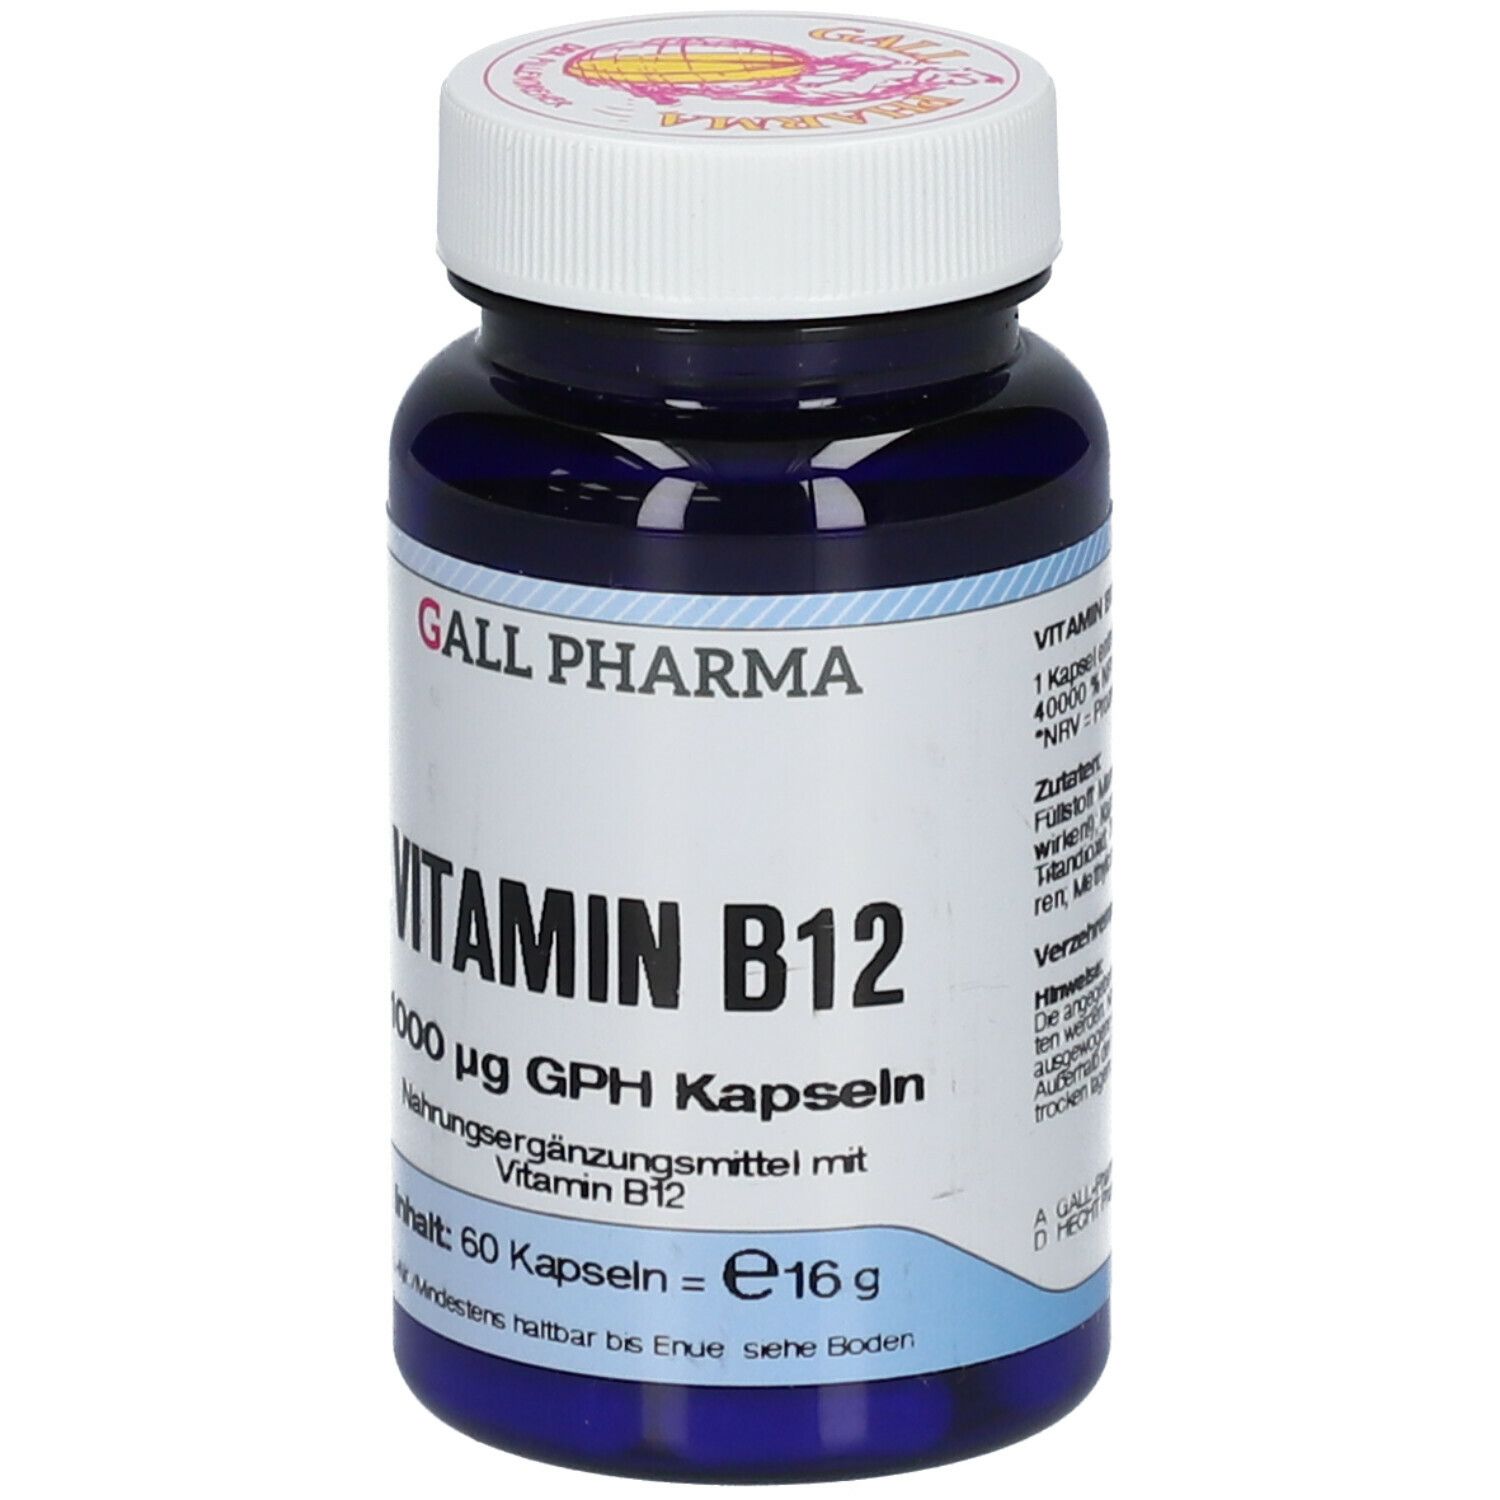 GALL PHARMA Vitamin B12 1000 µg GPH